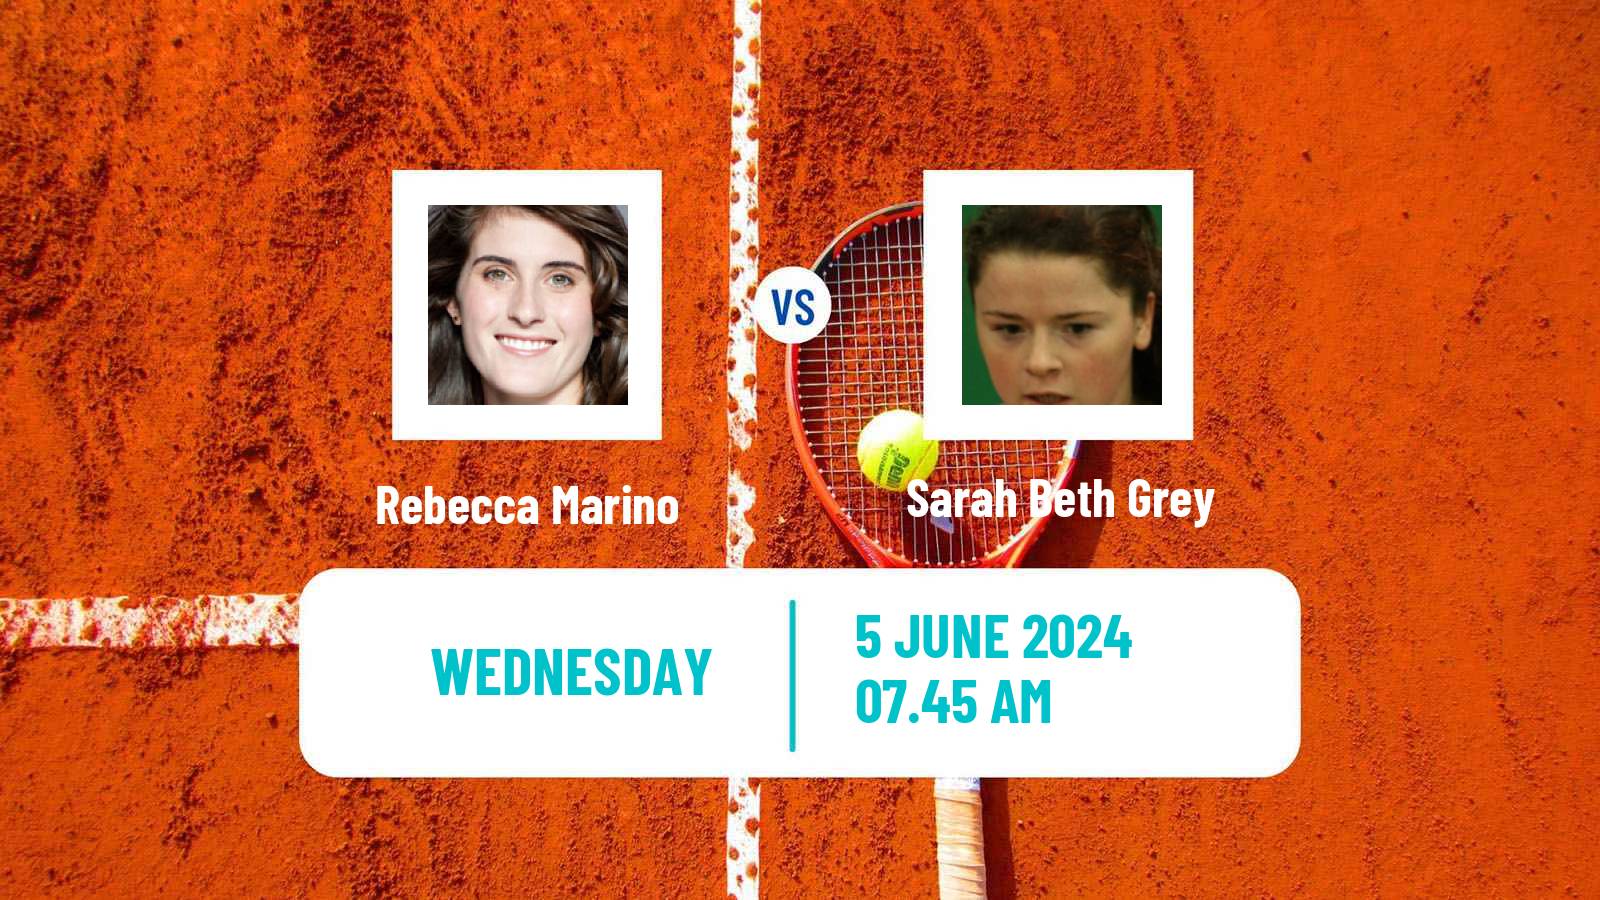 Tennis ITF W100 Surbiton Women Rebecca Marino - Sarah Beth Grey